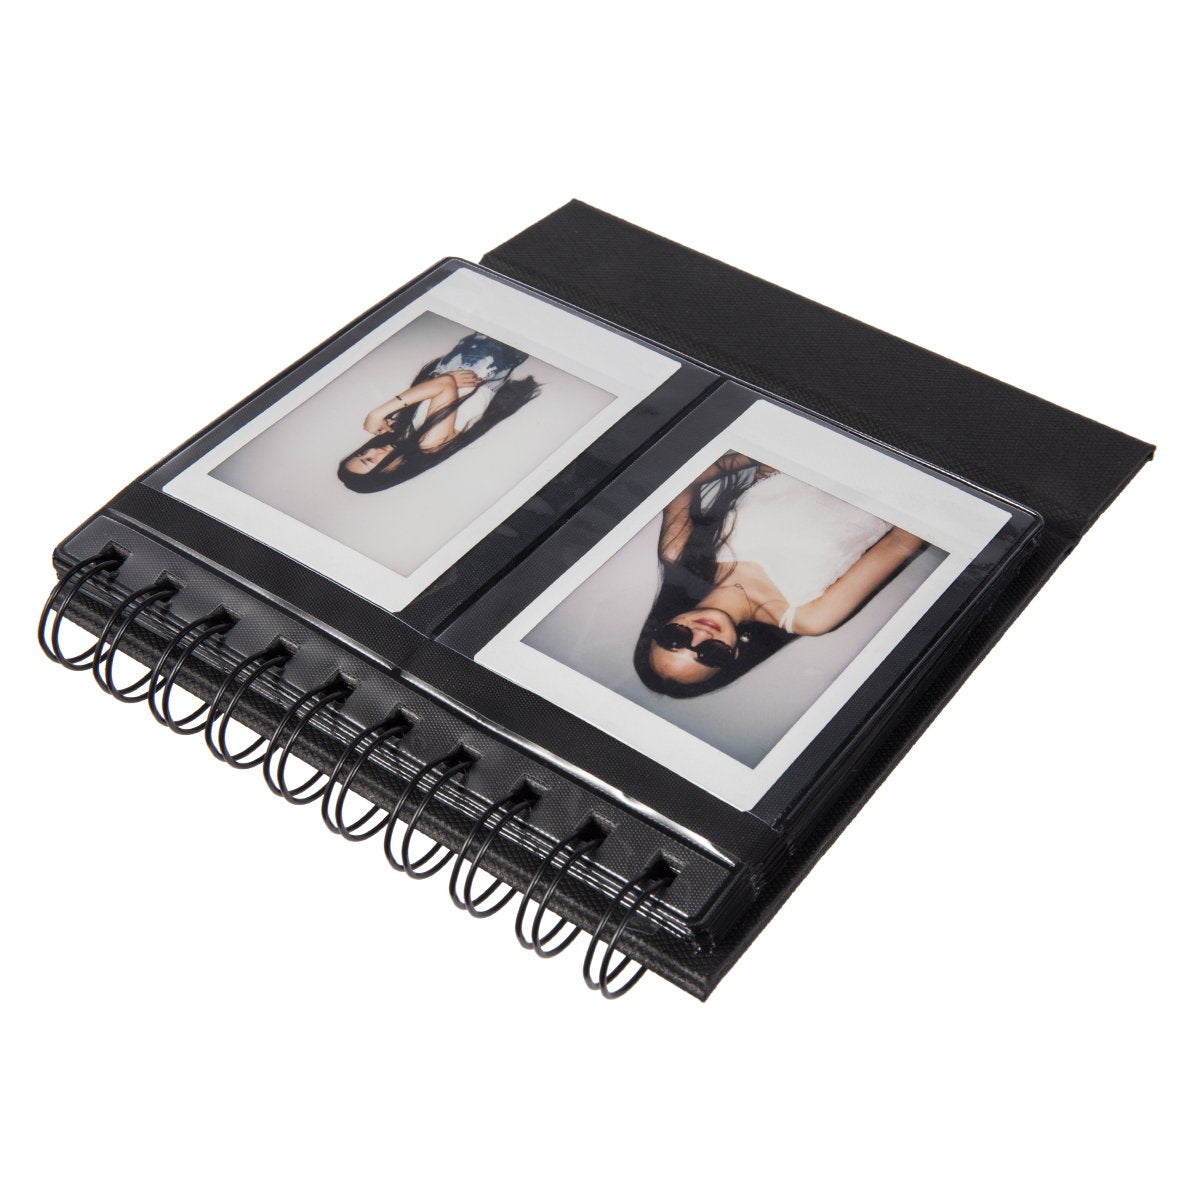 CAIUL 68 Pockets Desk Calendar Style Photo Album for Fujifilm Instax Mini 8 8+ 9 70 7s 90 25 26 50s Films (Black)